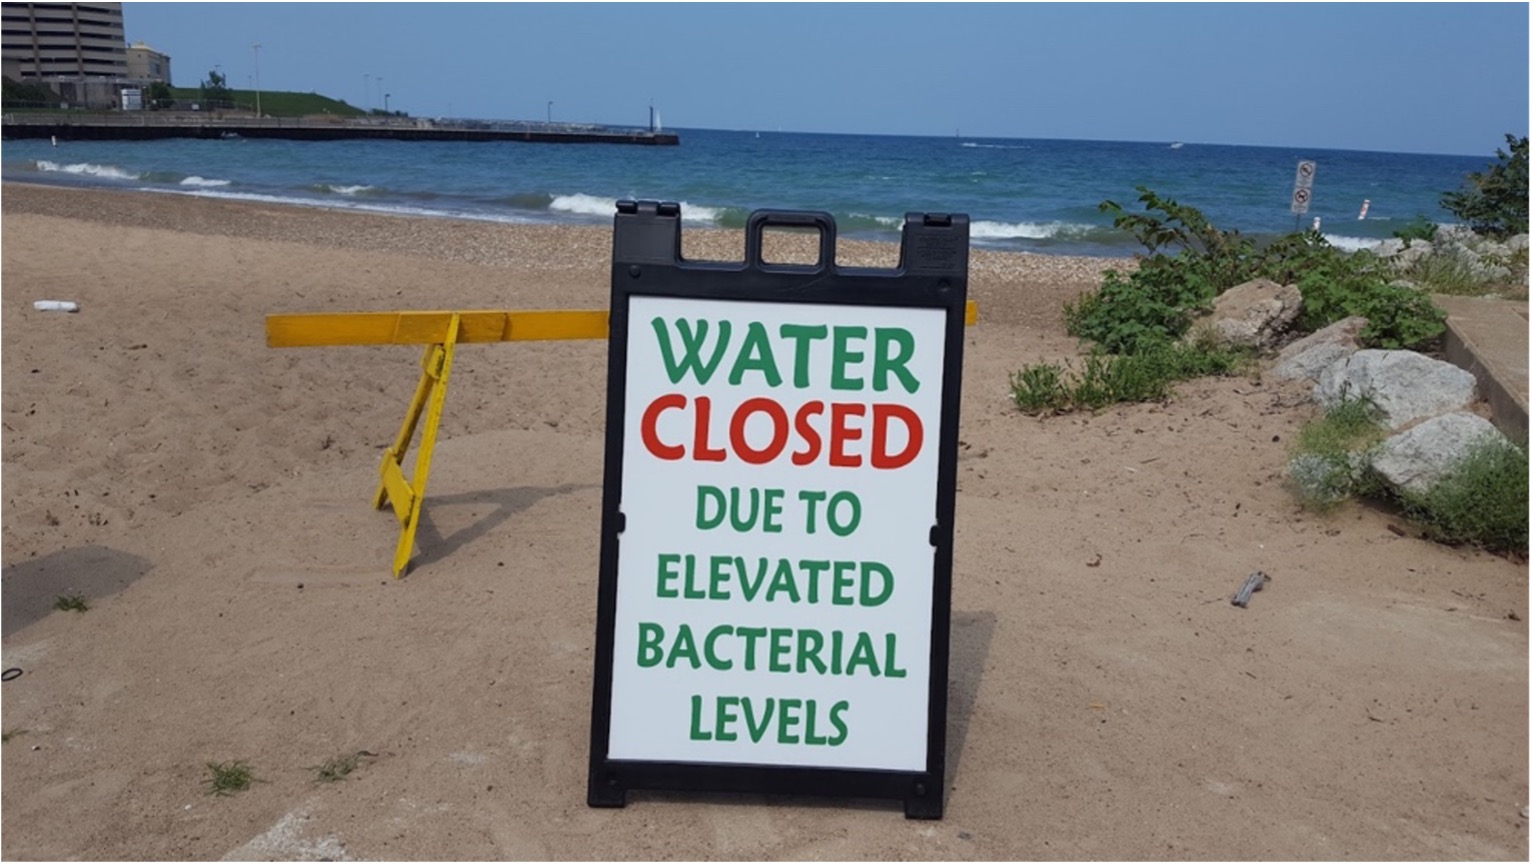 Elevated bacteria level warning sign